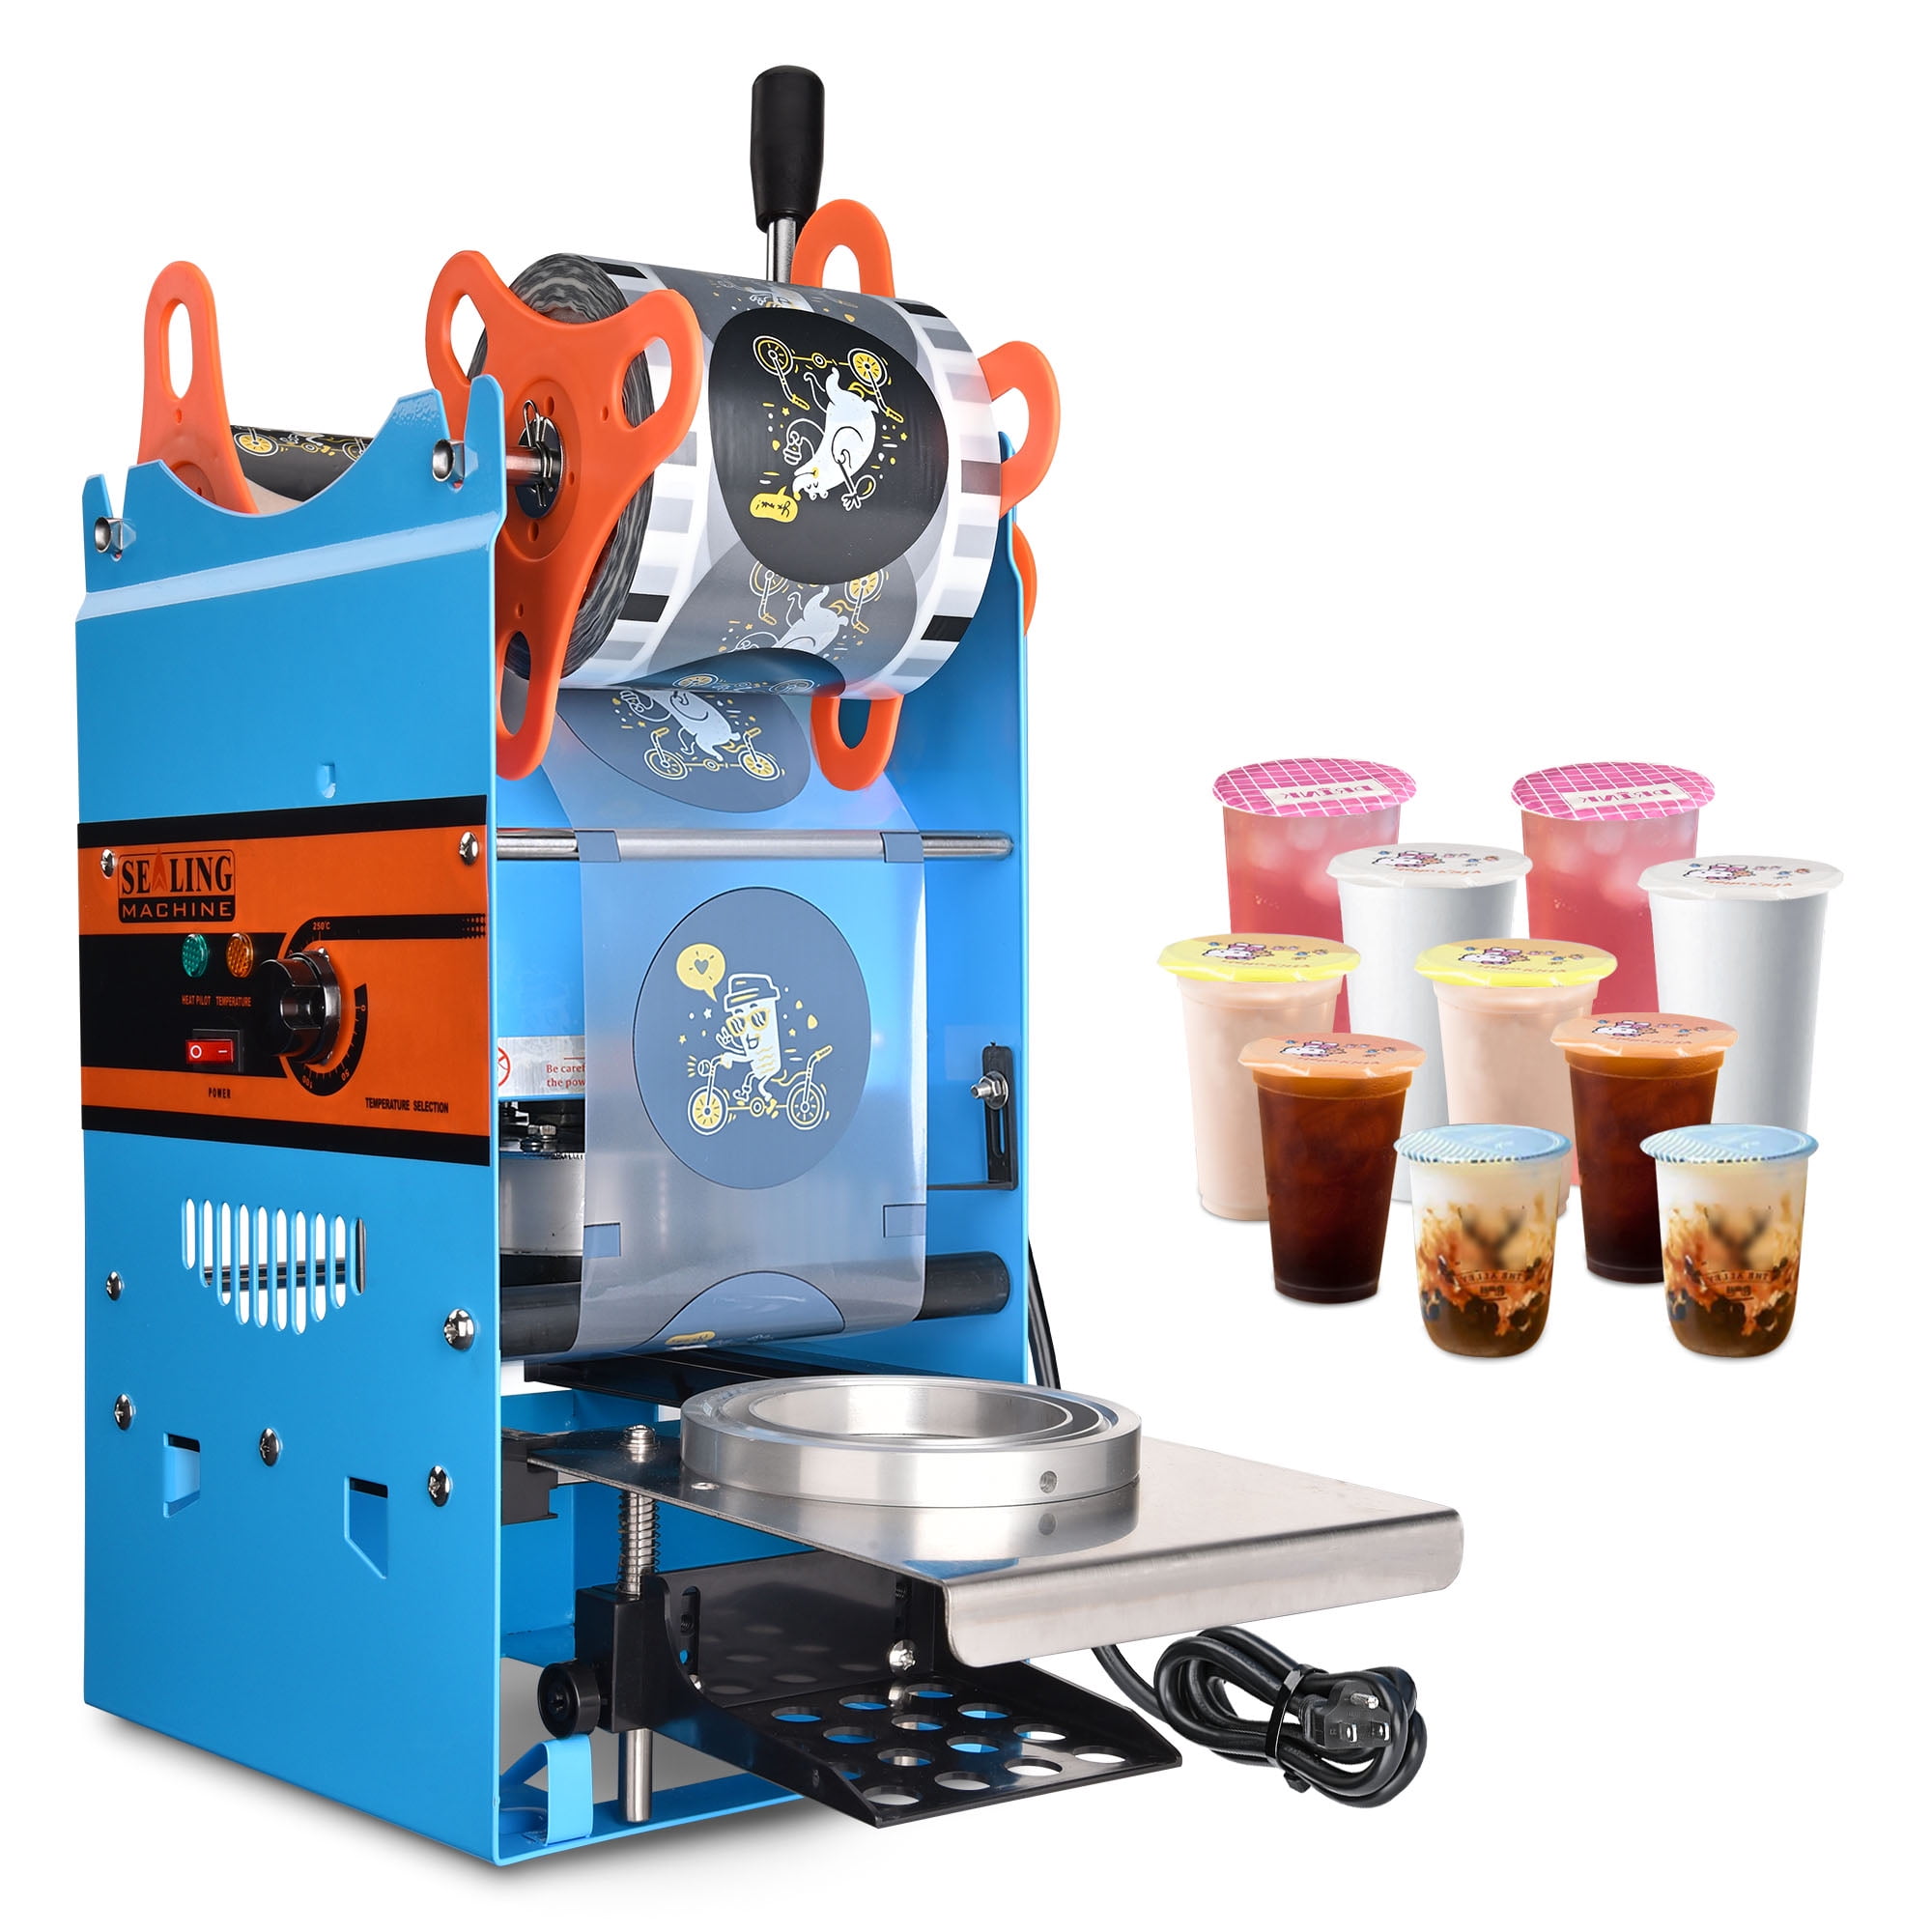 VEVOR Manual Tea Cup Sealer Machine 300-500 Cup per Hour 90/95 mm Cup  Diameter Boba Tea Sealing Machine for Restaurants, Blue NFWY-802F110VPRA2V1  - The Home Depot